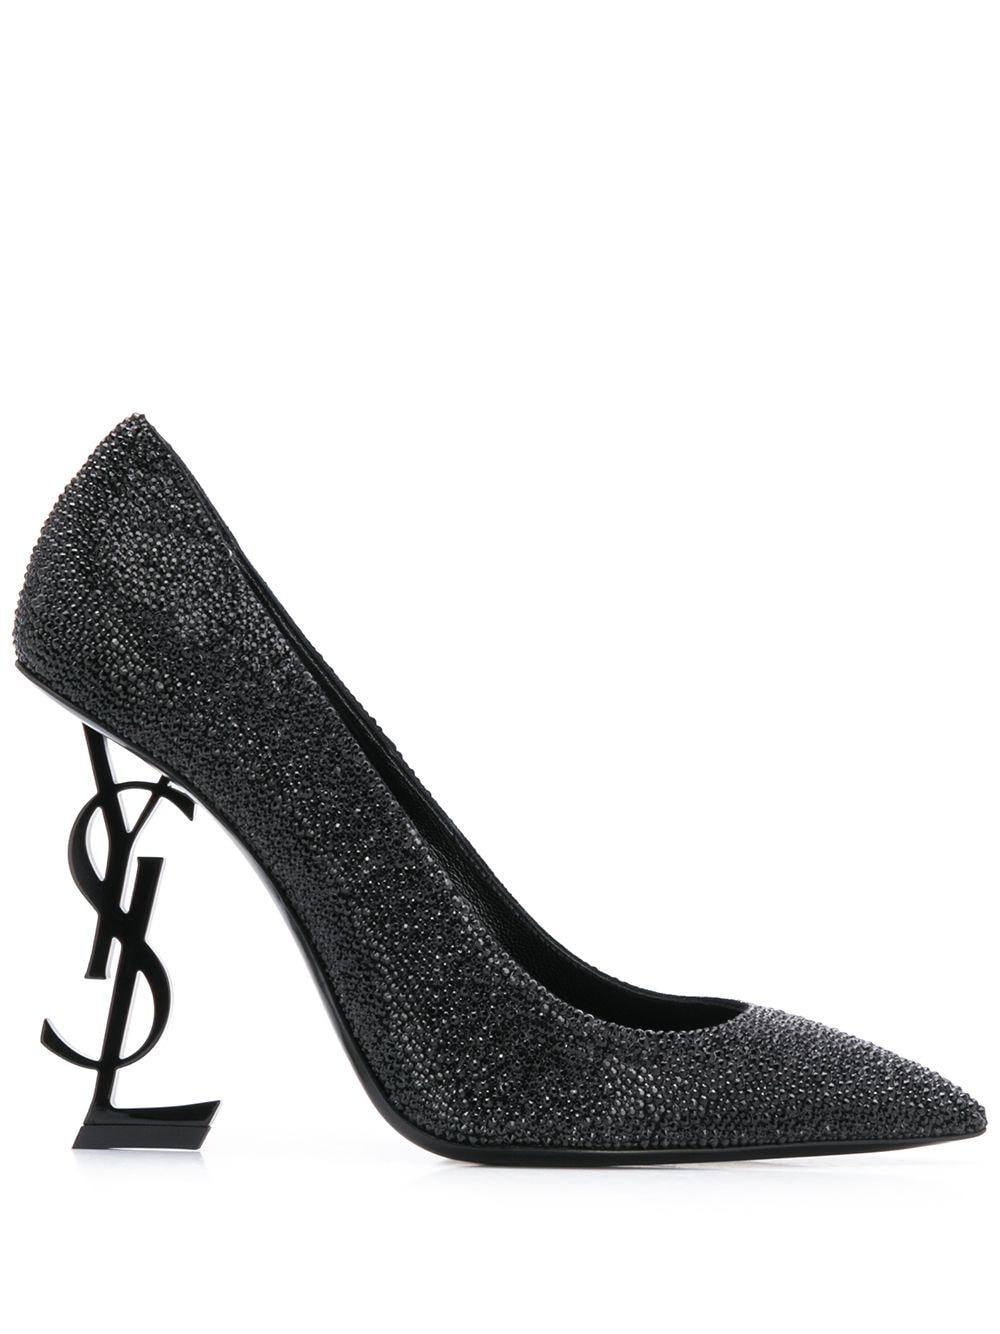 Buy MARCELLI Black Sparkle heels Online at Shoe Connection